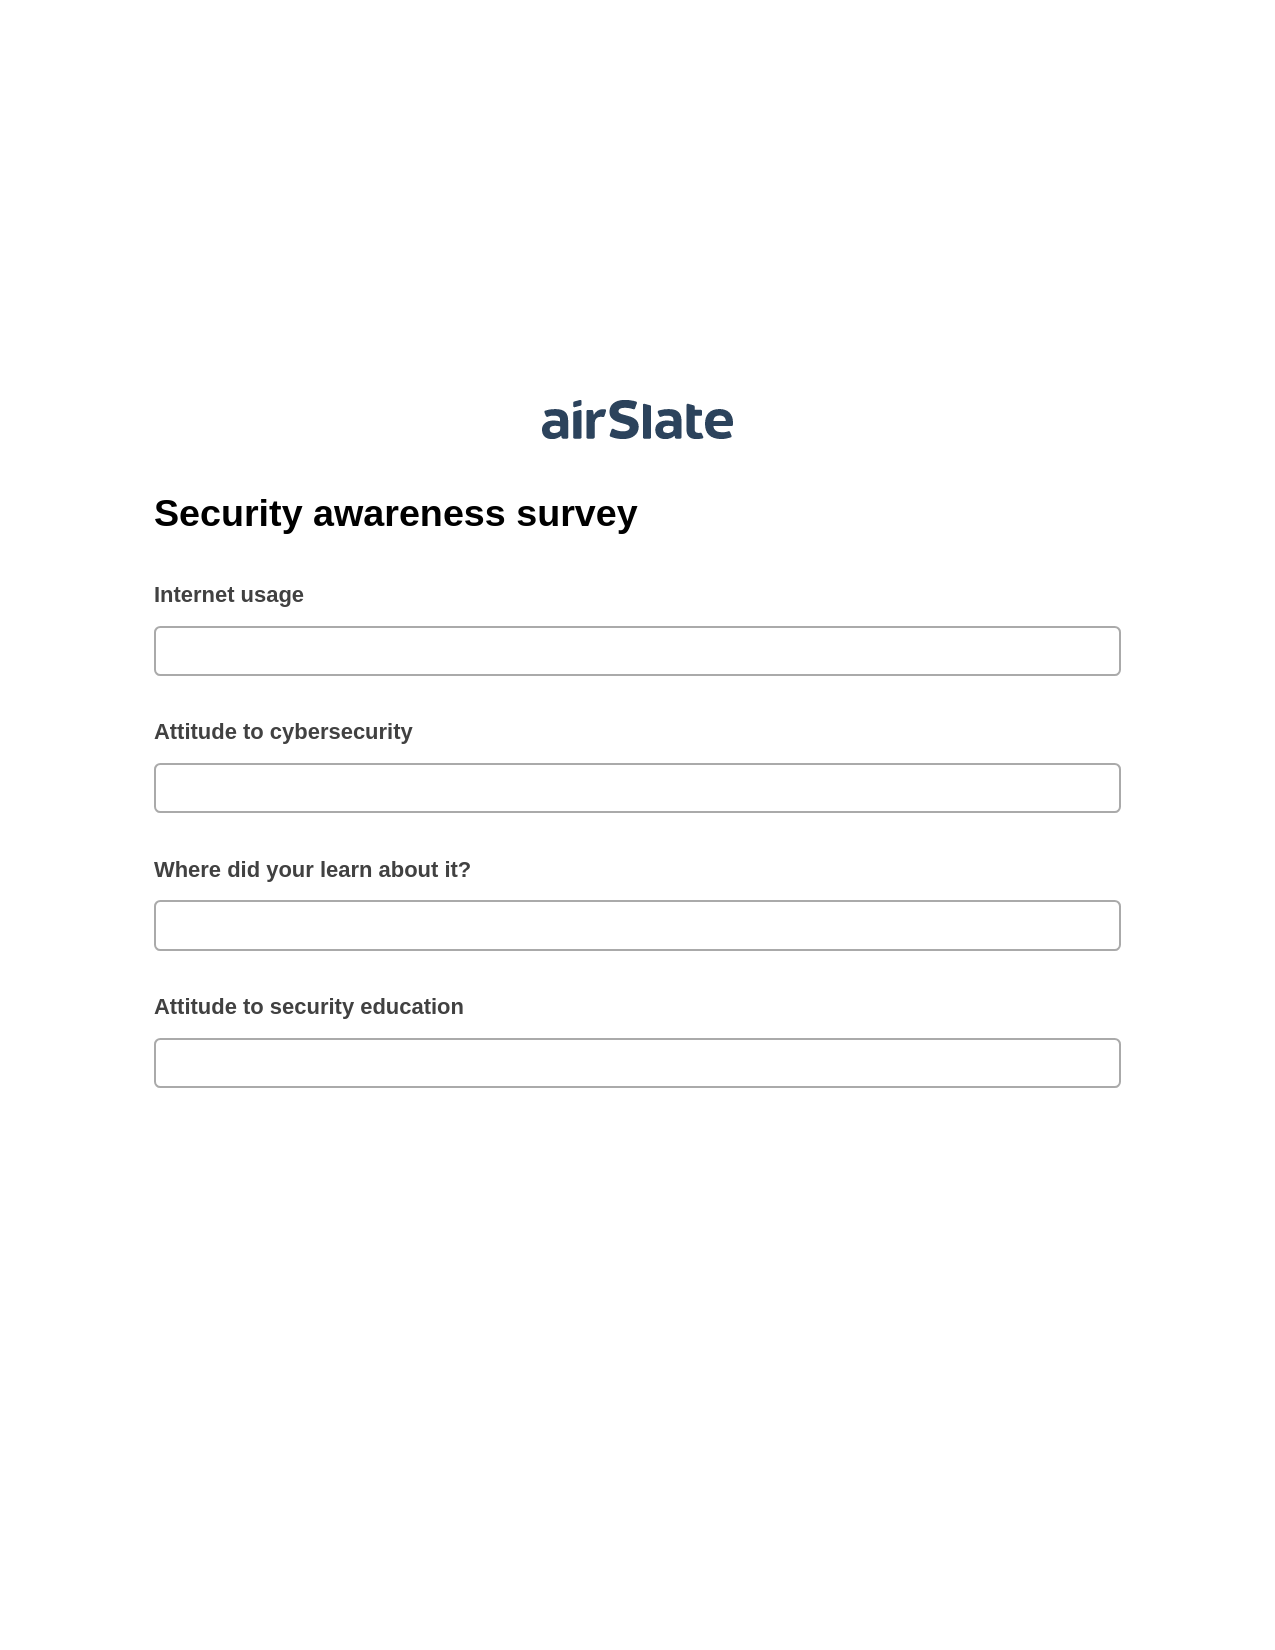 Multirole Security awareness survey Pre-fill Document Bot, Email Notification Bot, Google Drive Bot